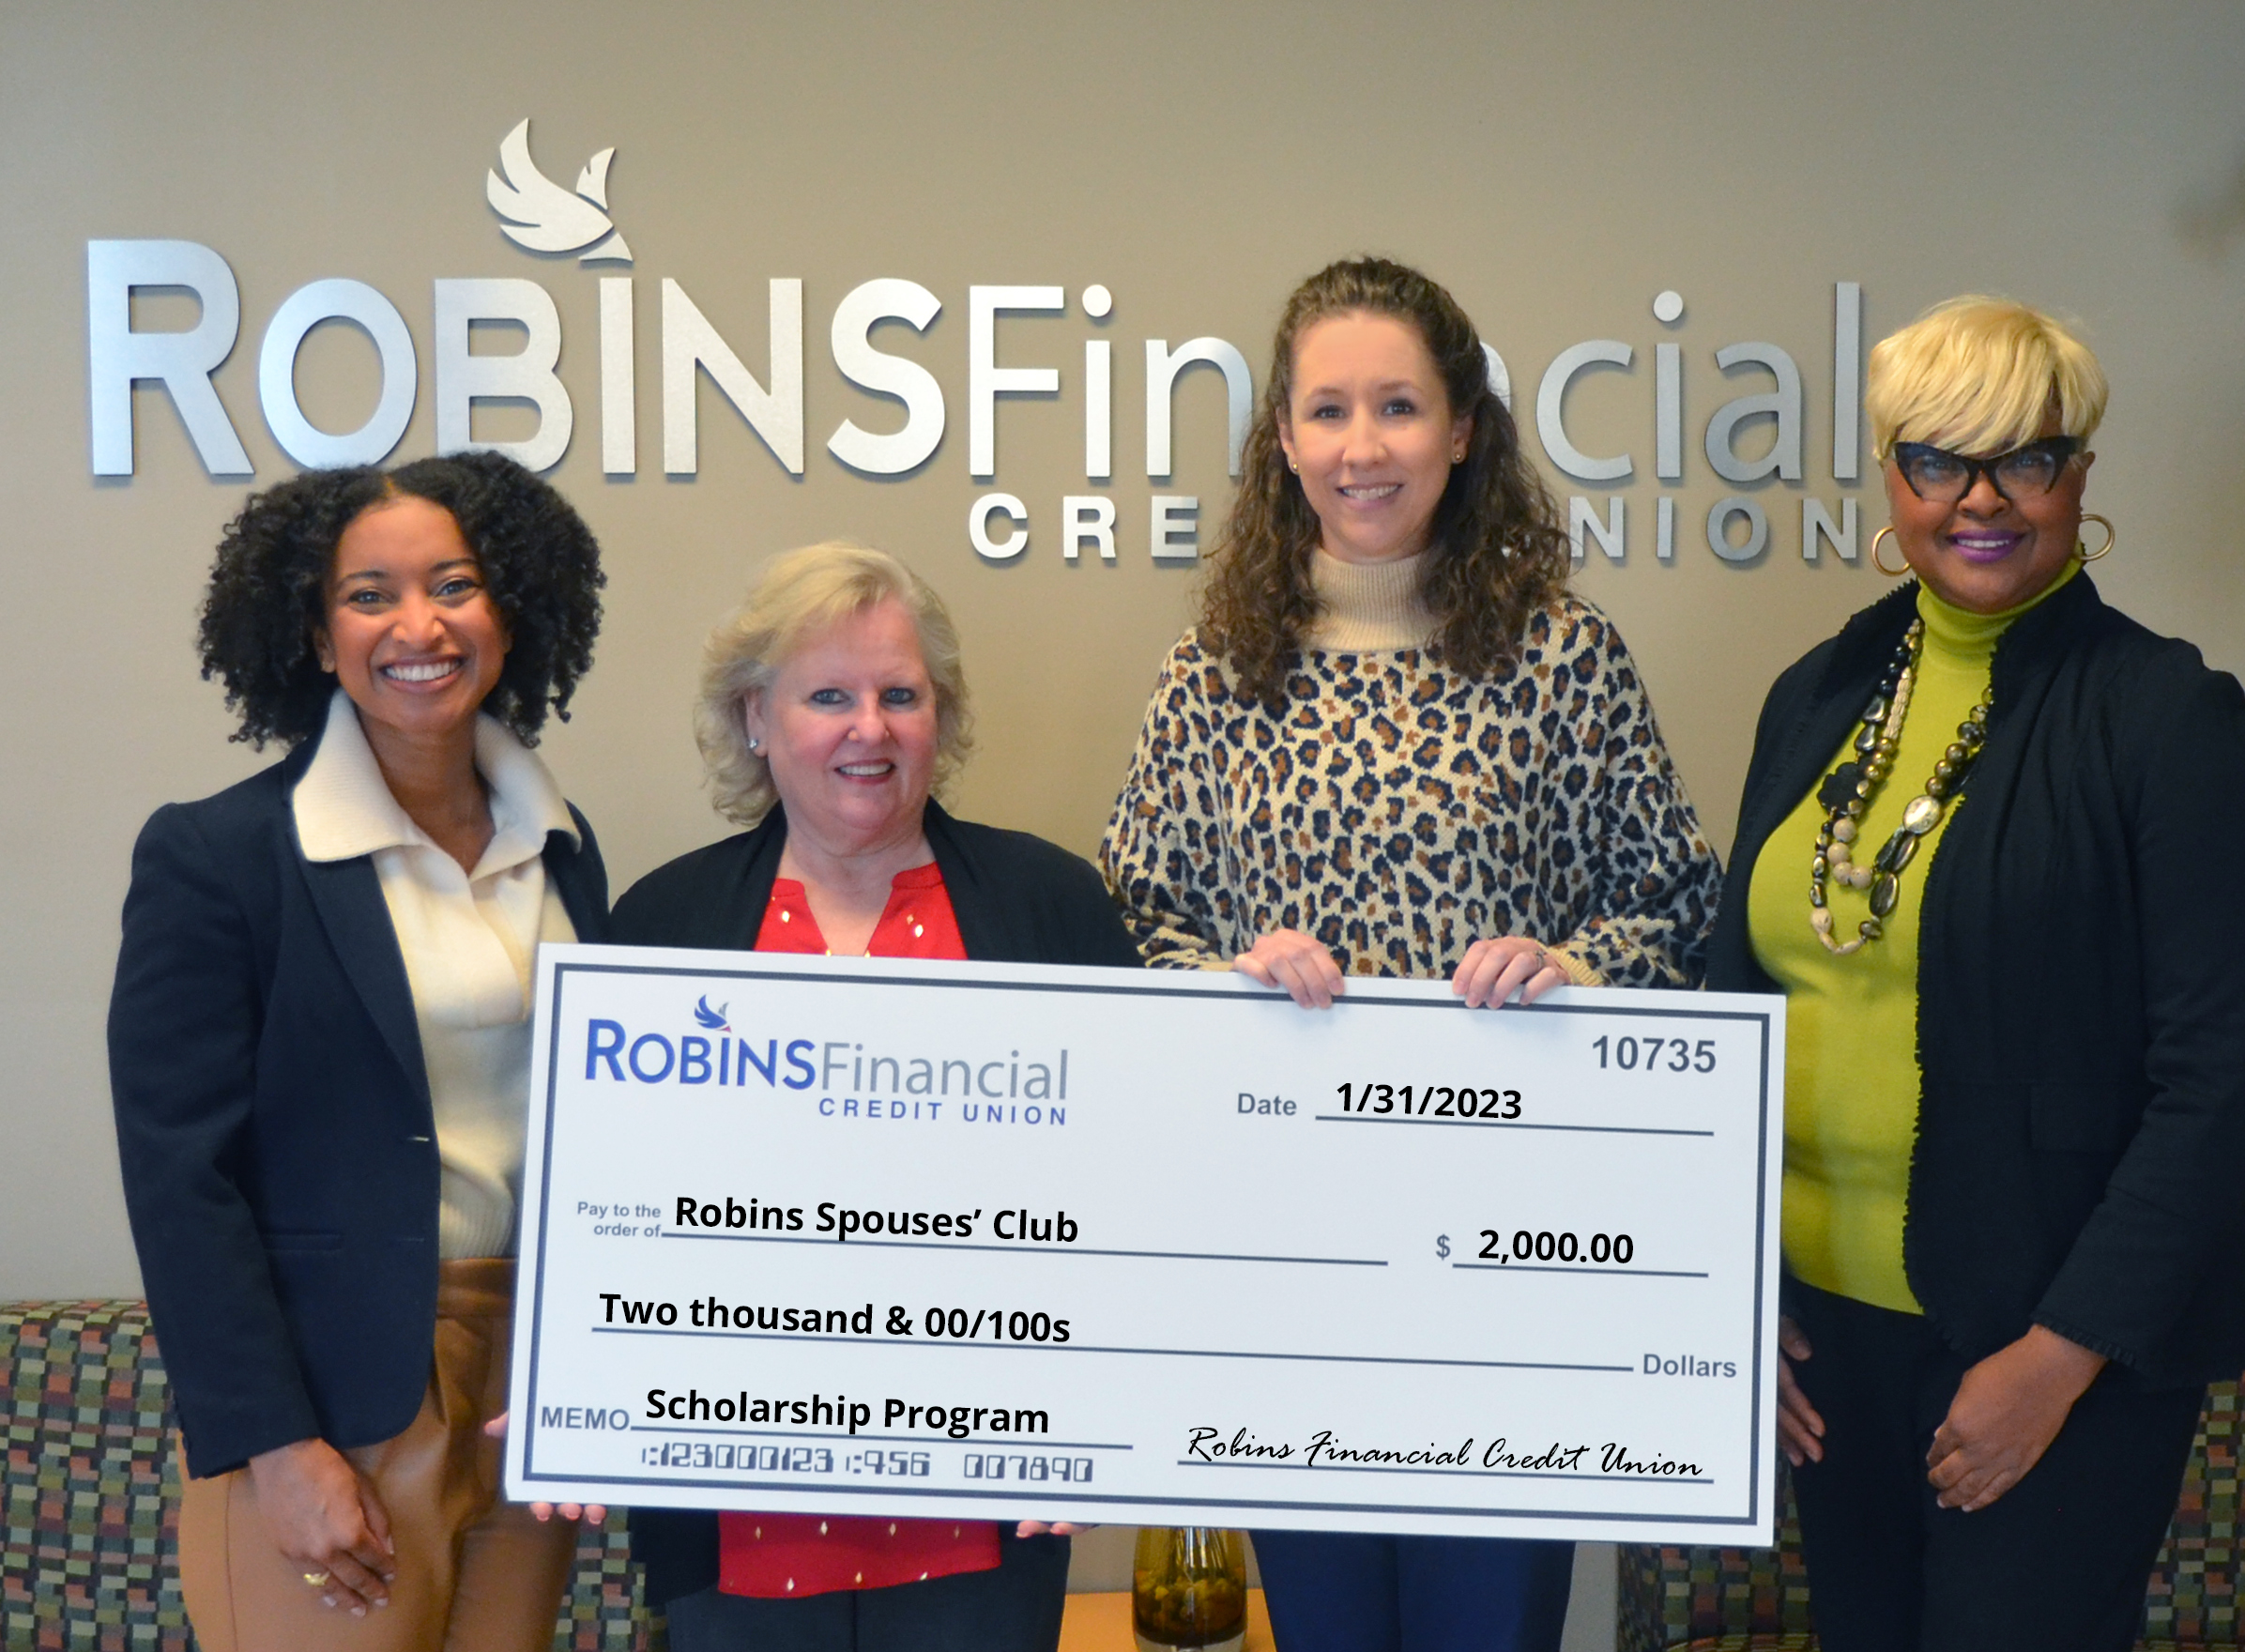 Robins Financial Sponsors Military Scholarships